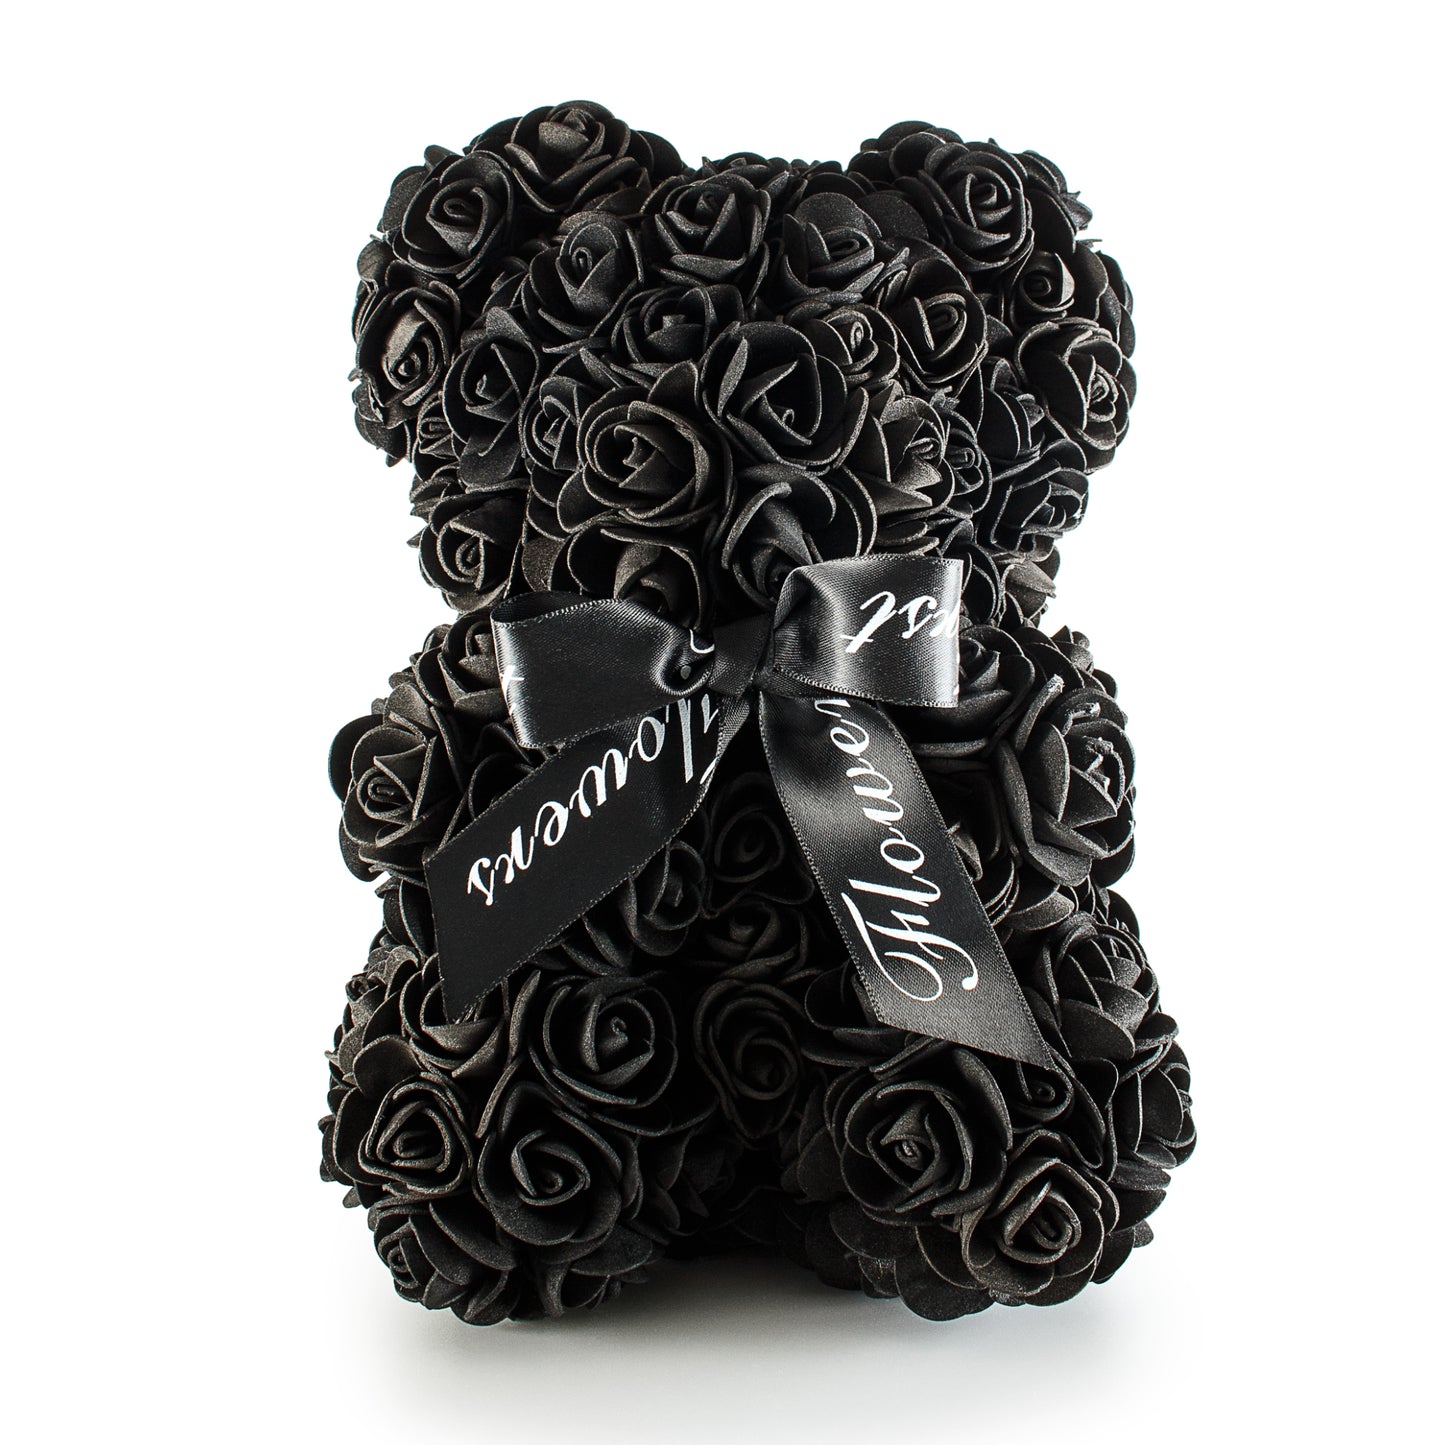 Black Luxury Handmade Rose Teddy Bear